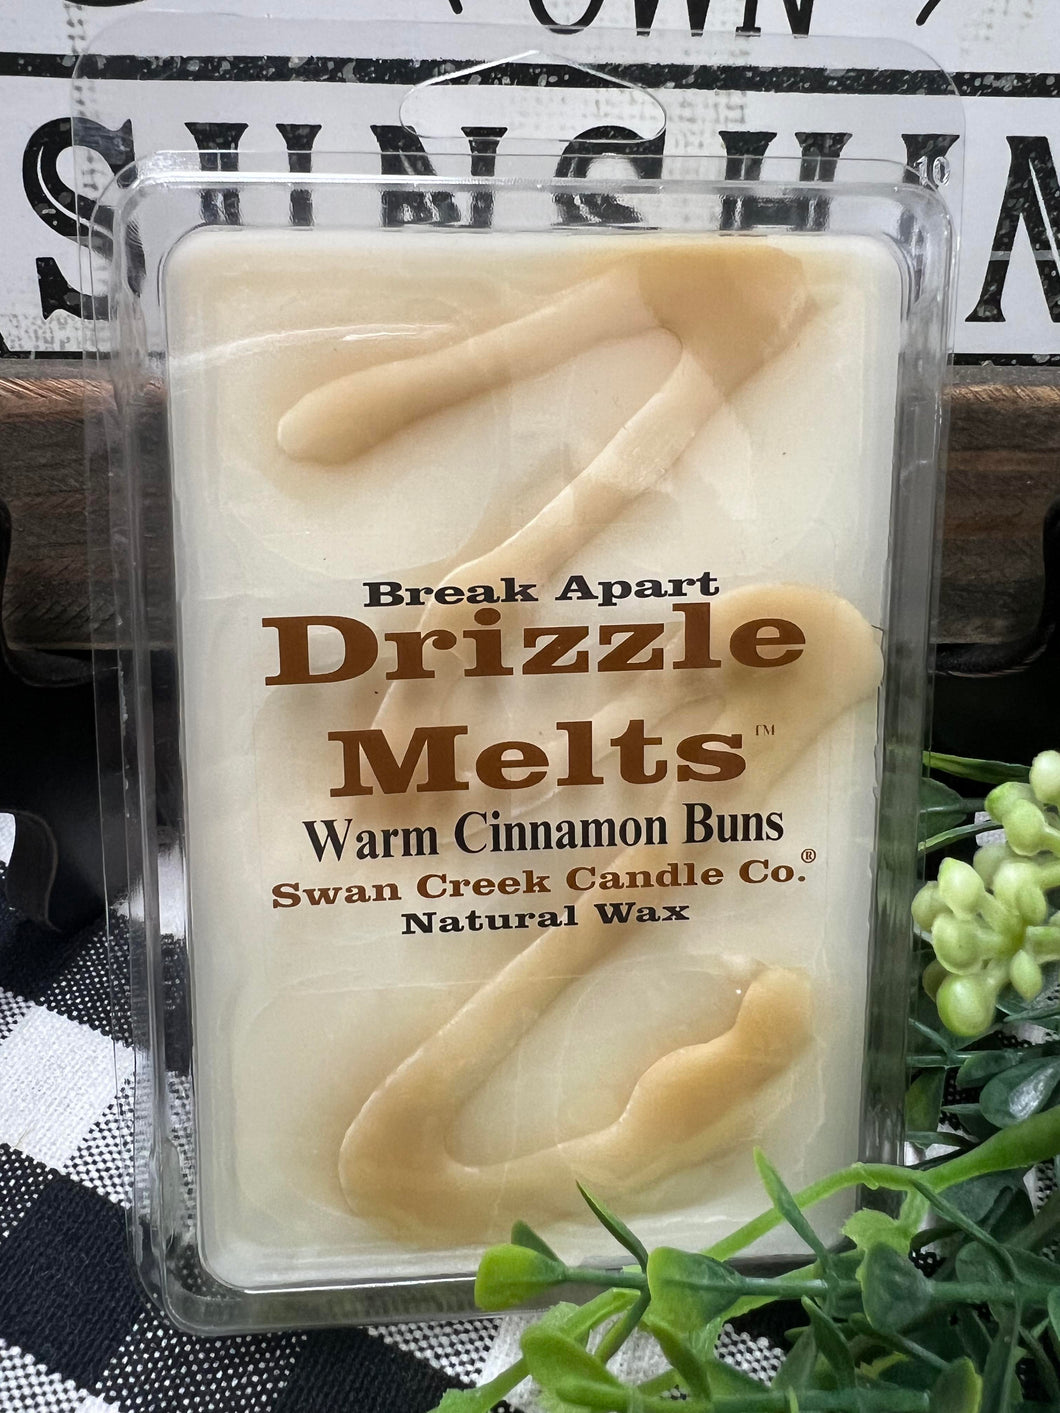 Swan Creek Candle Co. Warm Cinnamon Buns Drizzle Melts